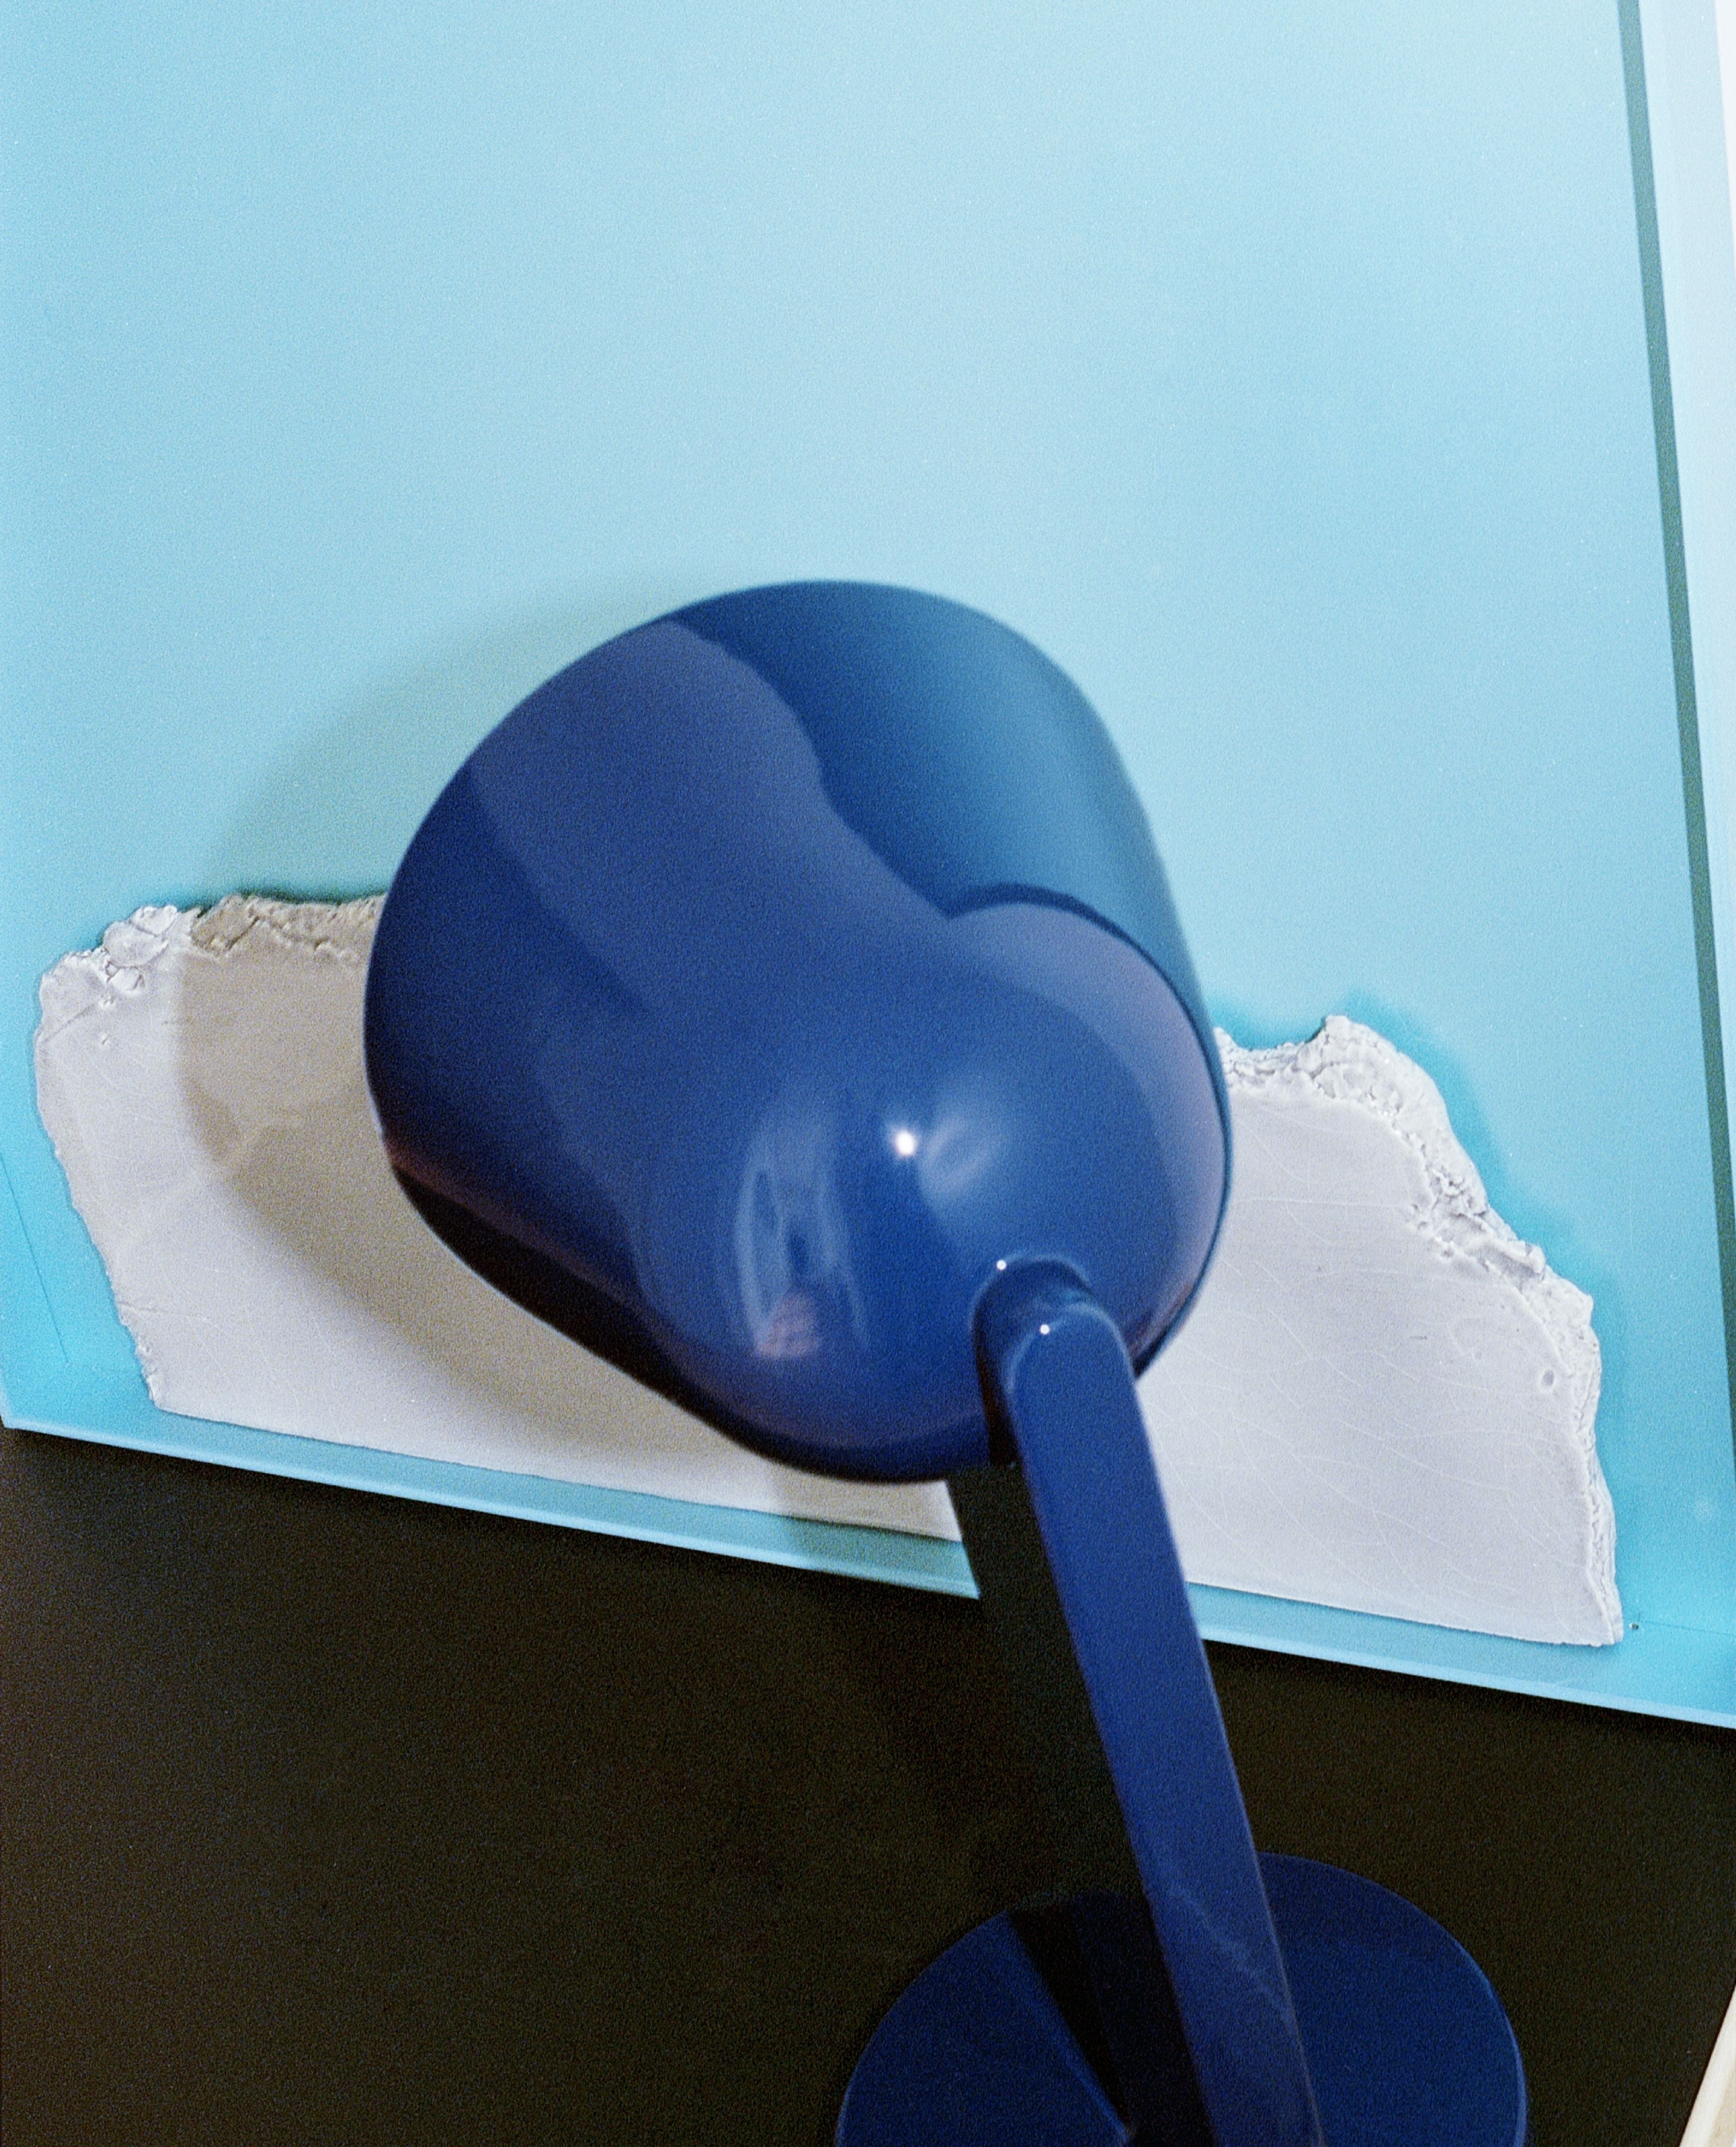 Flos Céramique tafellampzijde, marineblauw